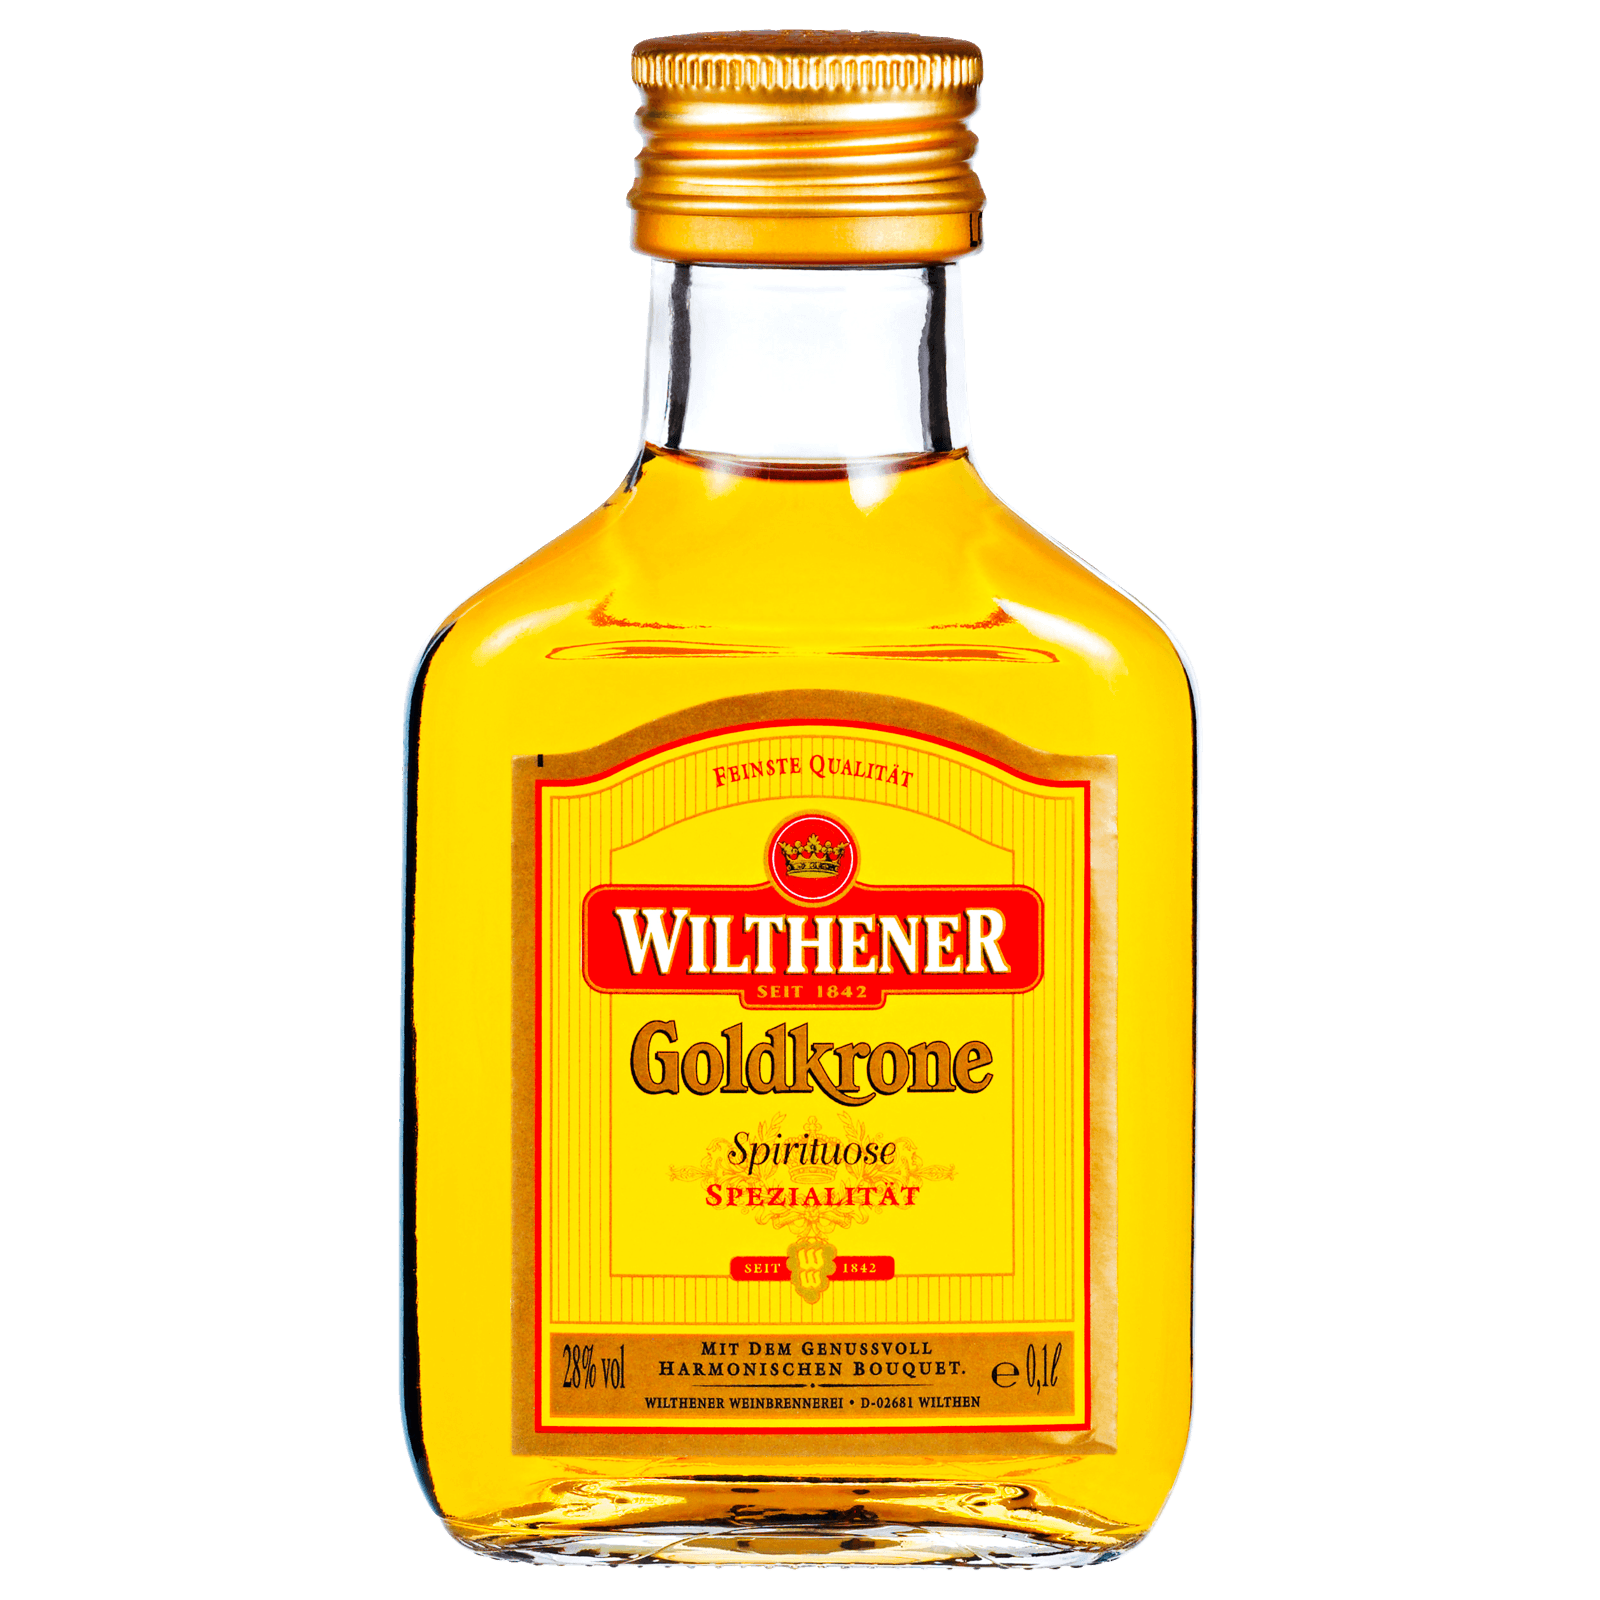 Wilhener Goldkrone 0,35l